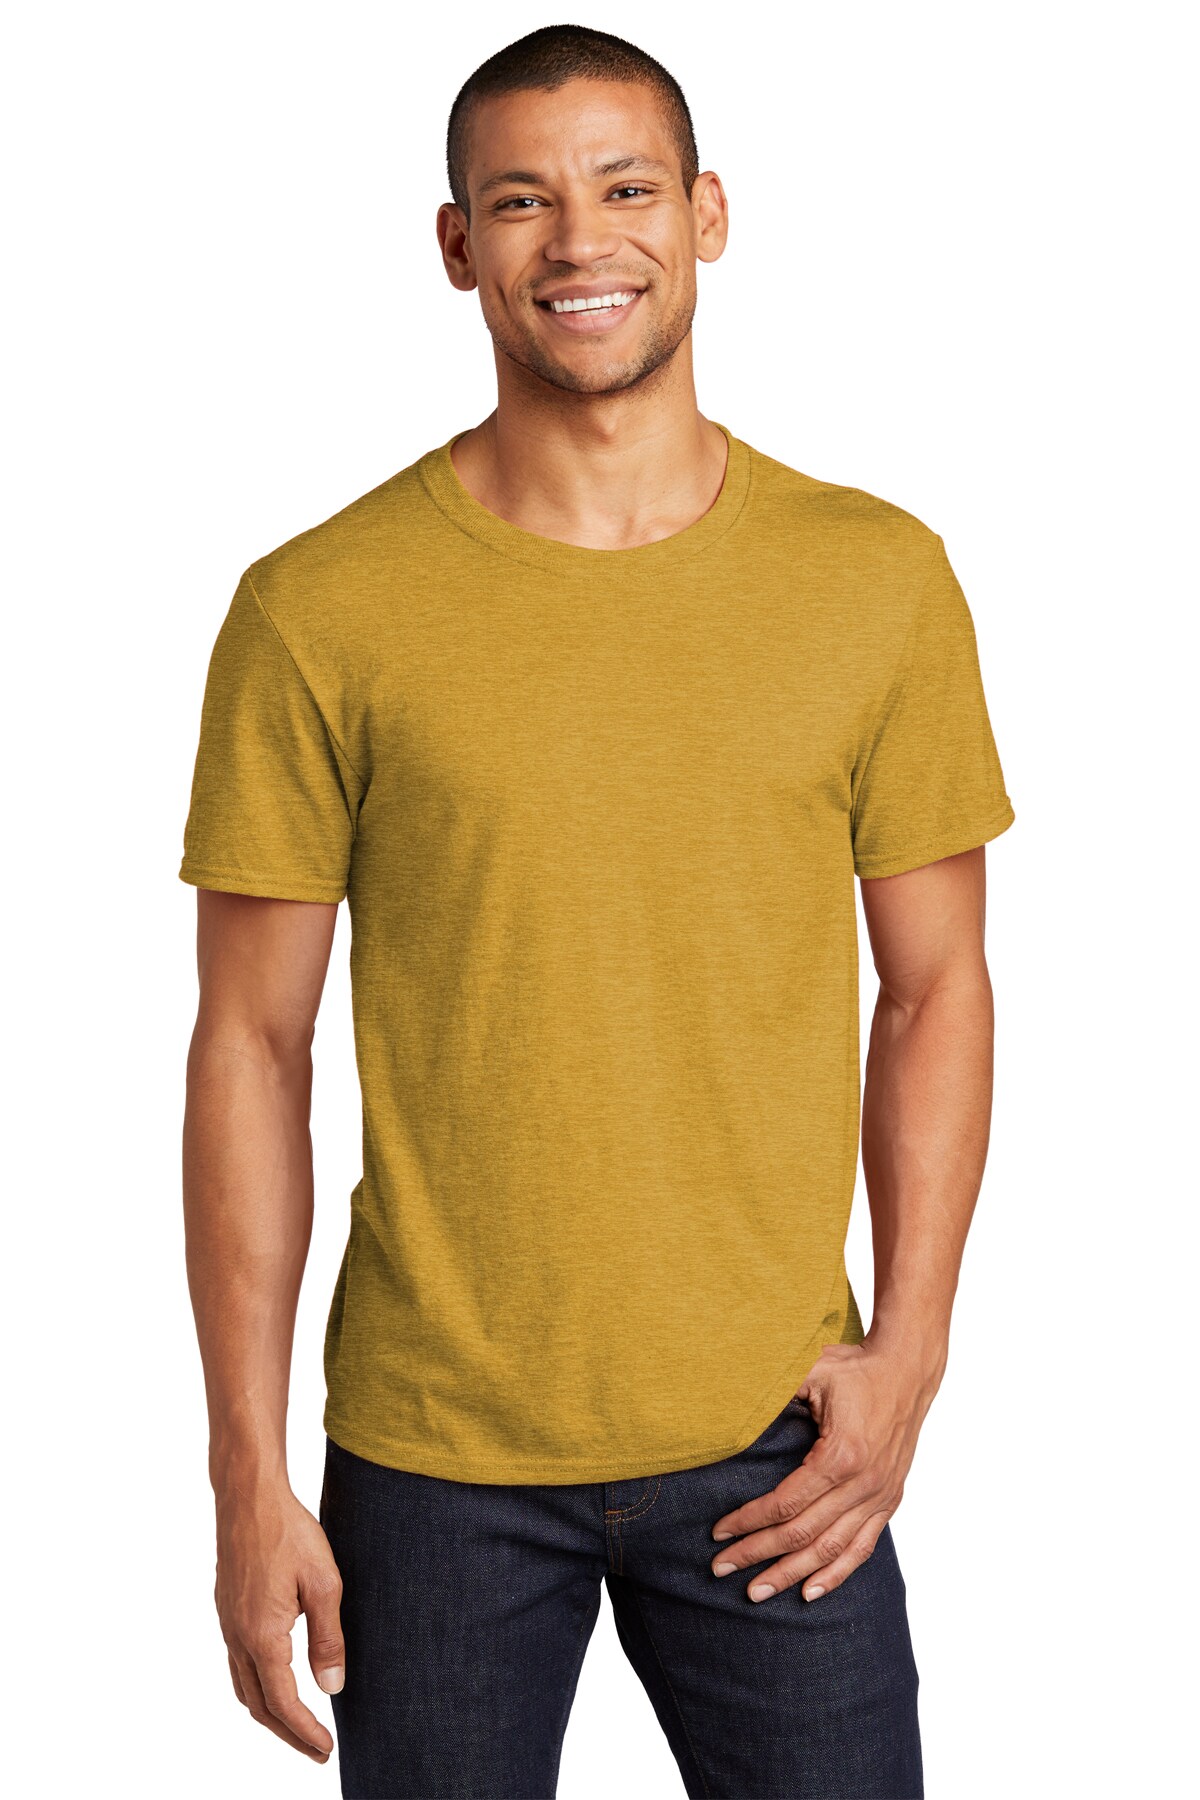 Men's Premium Ring Spun T-Shirt | 5.2-0z , 50/50 combed ring spun  cotton/poly | Durable, High Quality & Breathable T-Shirt for men’s | RADYAN